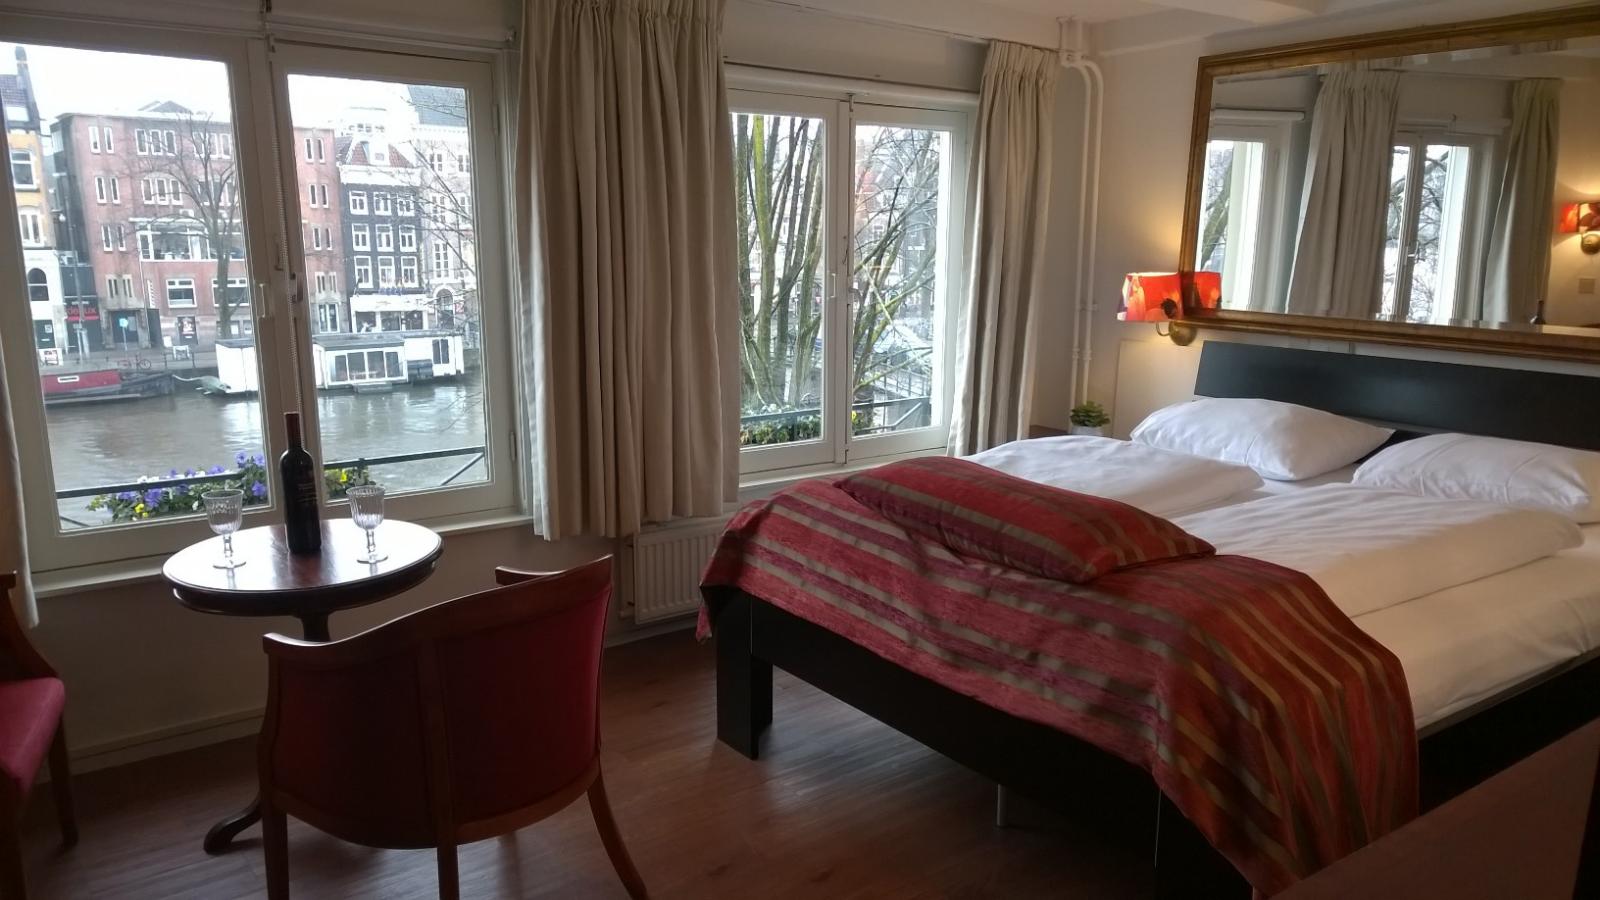 Kamer met uitzicht - Amsterdam House Hotel